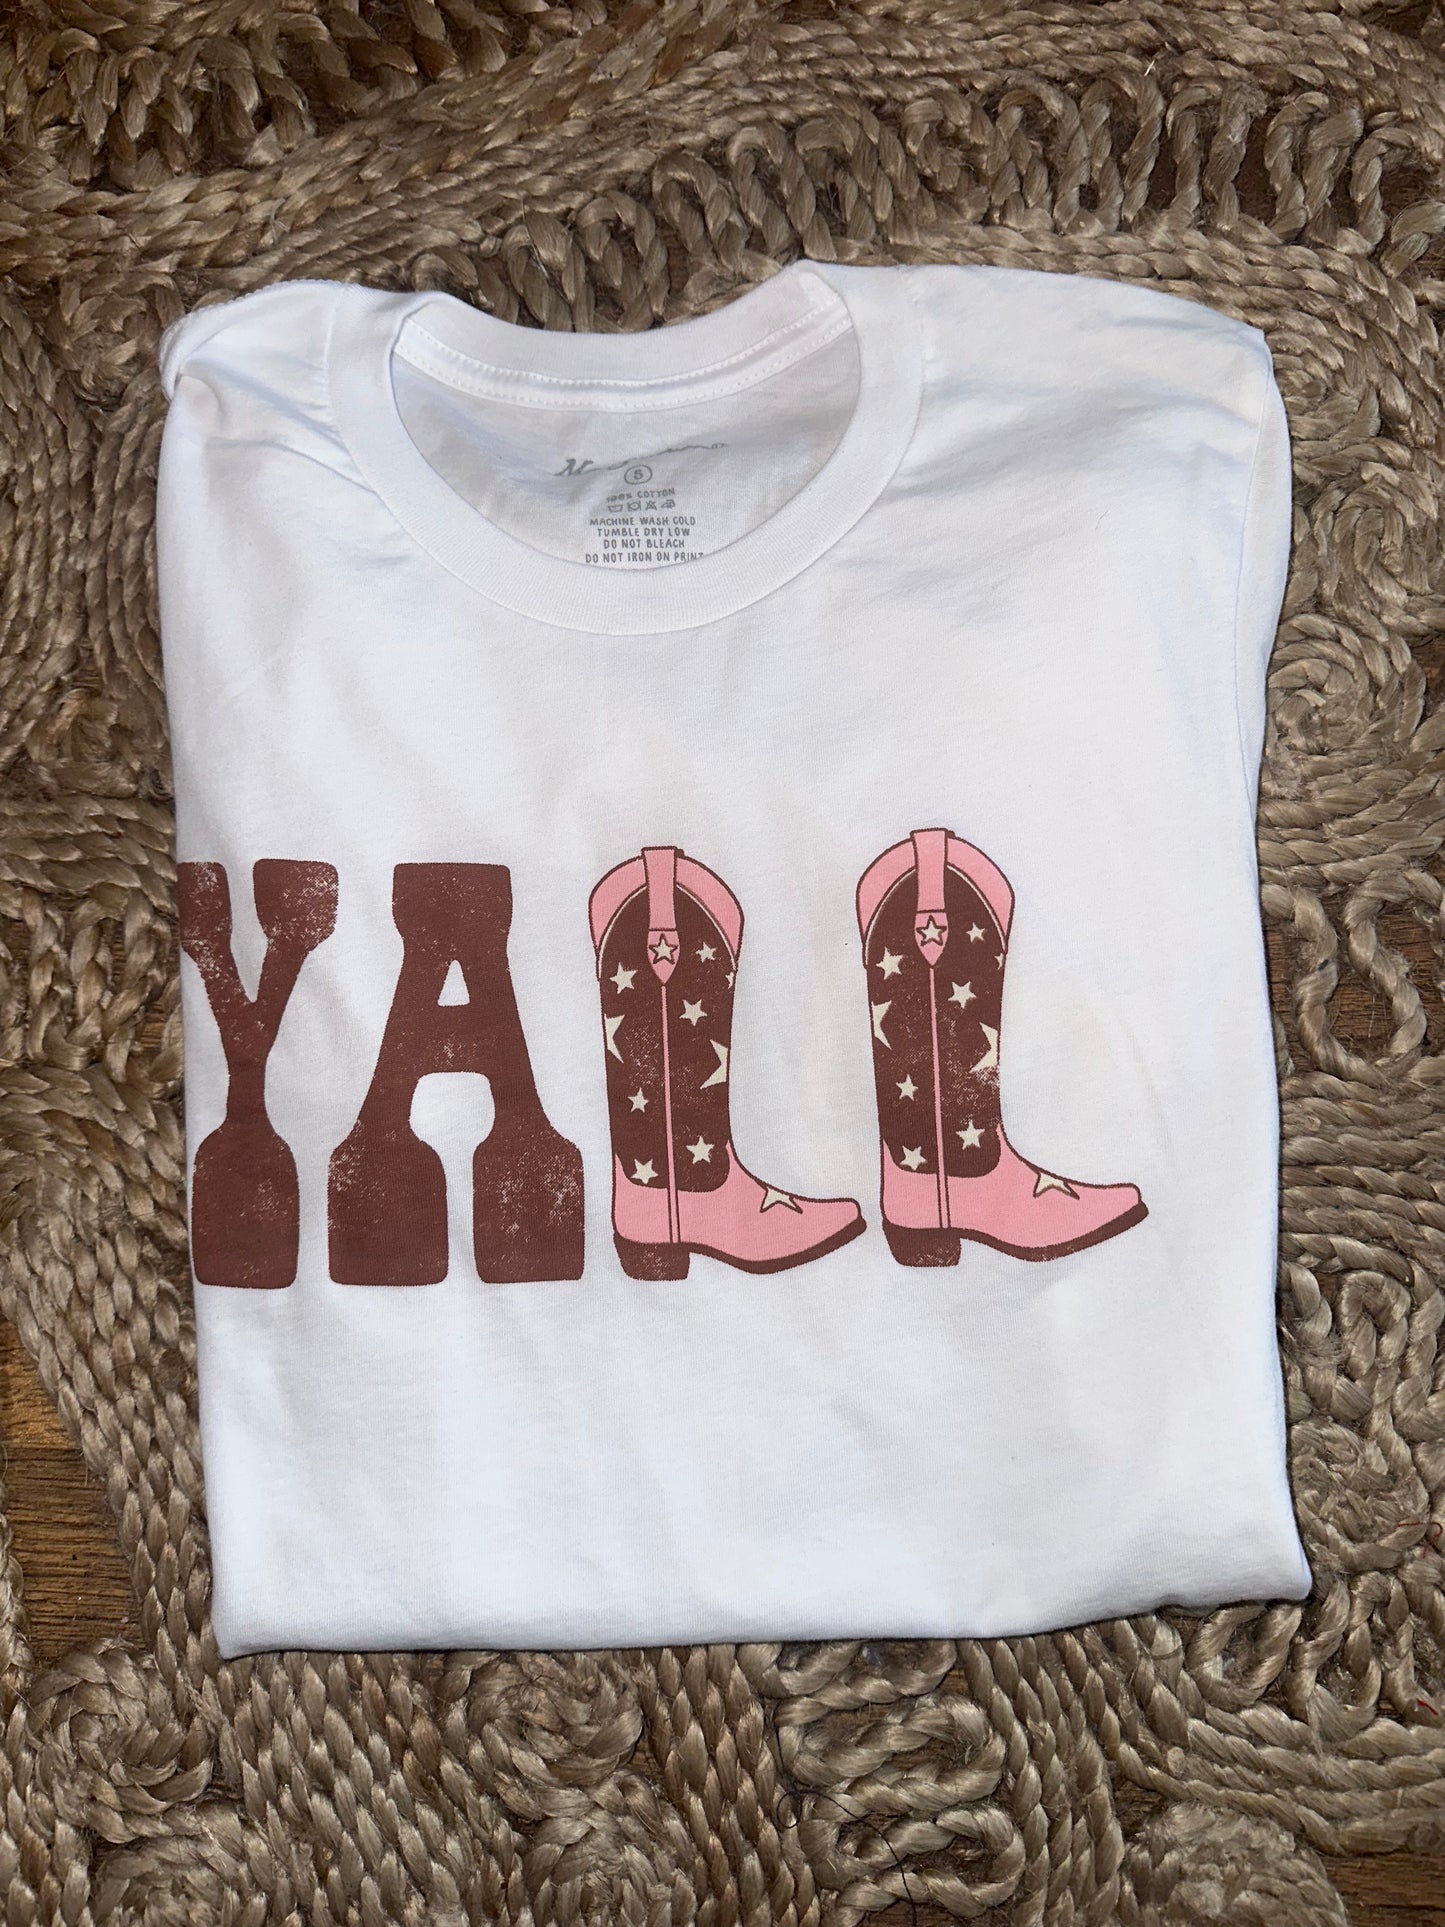 Y’all boot tshirt